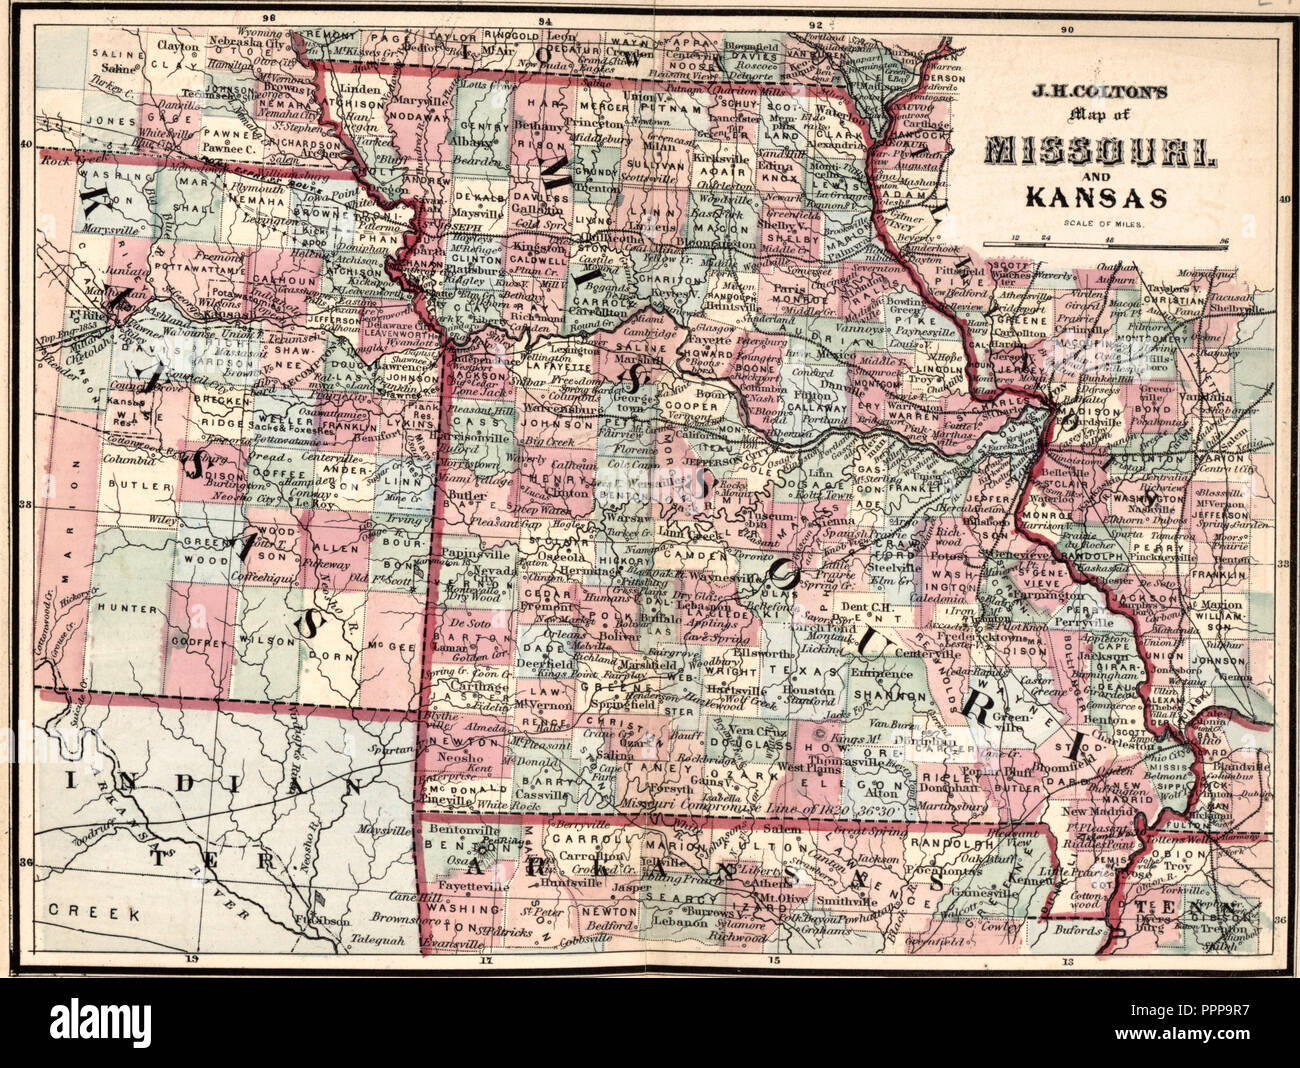 J H Colton's Map of Missouri and Kansas, circa 1863 Stock Photo